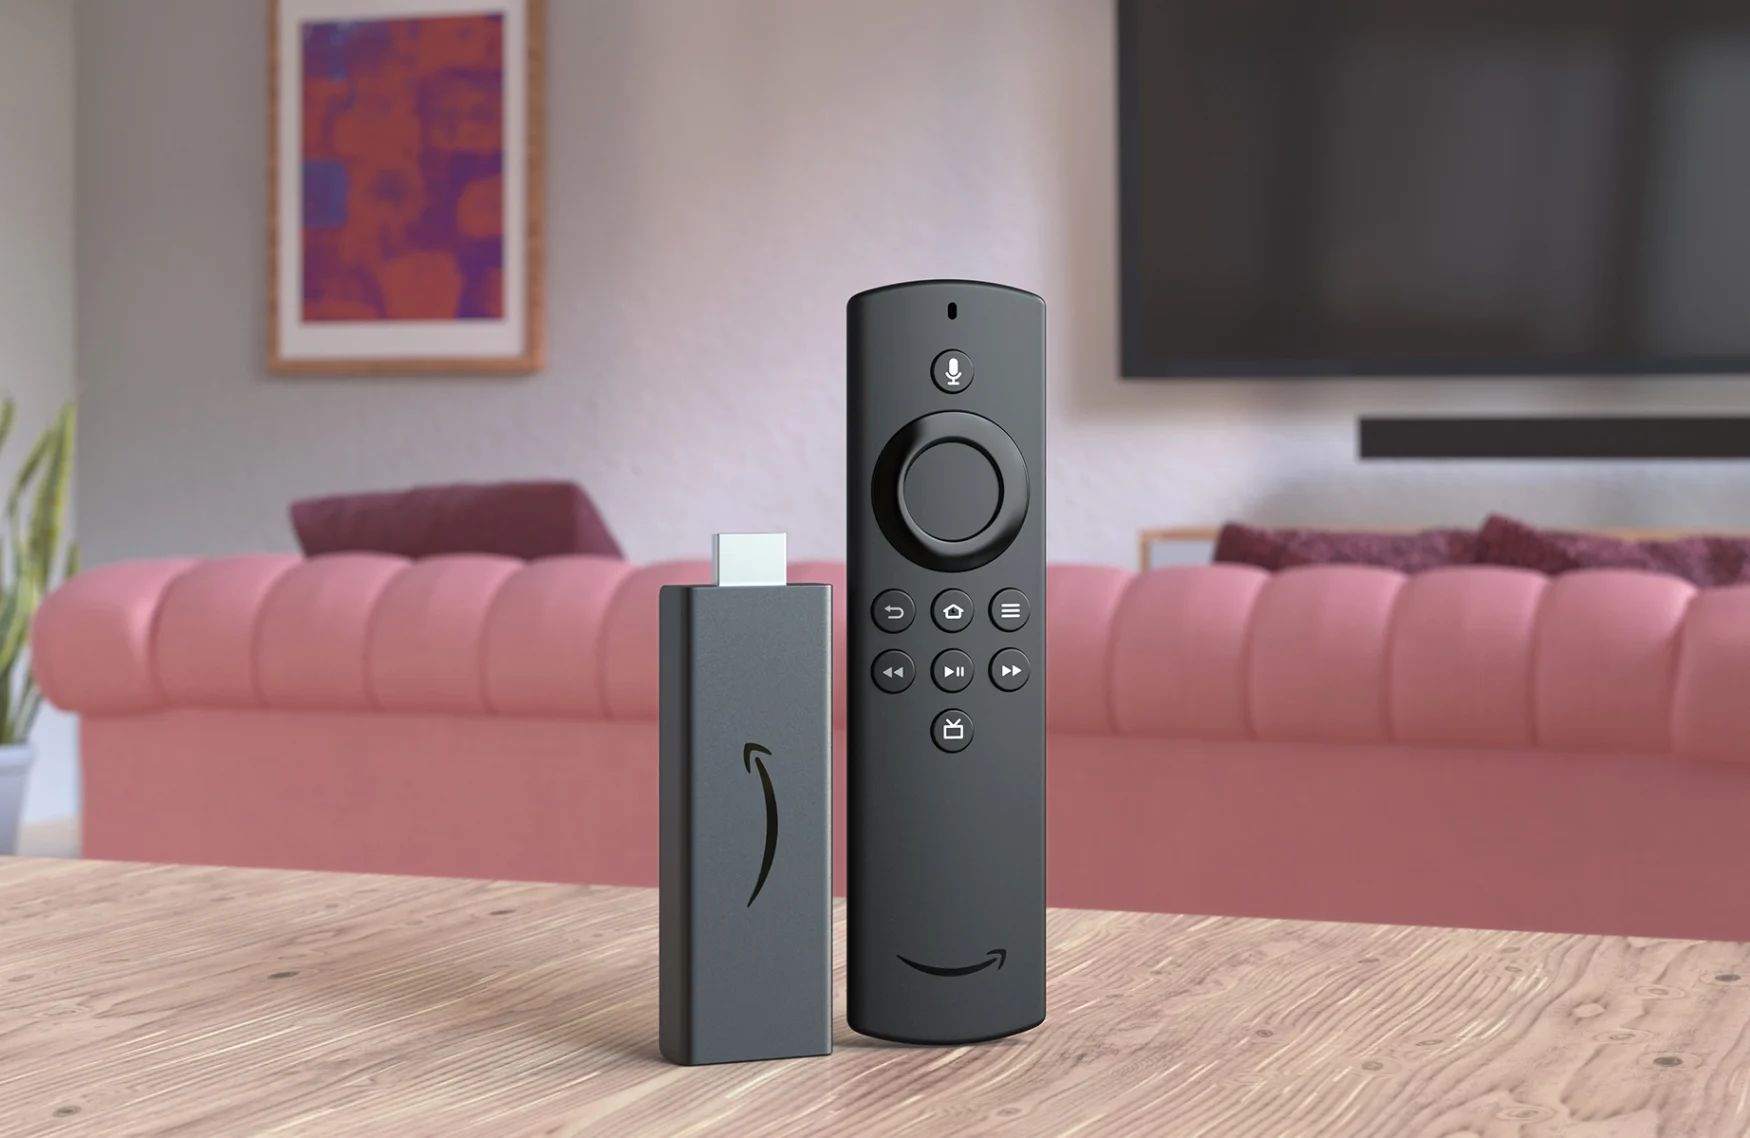 Amazon's Fire TV Stick Lite media streamer.